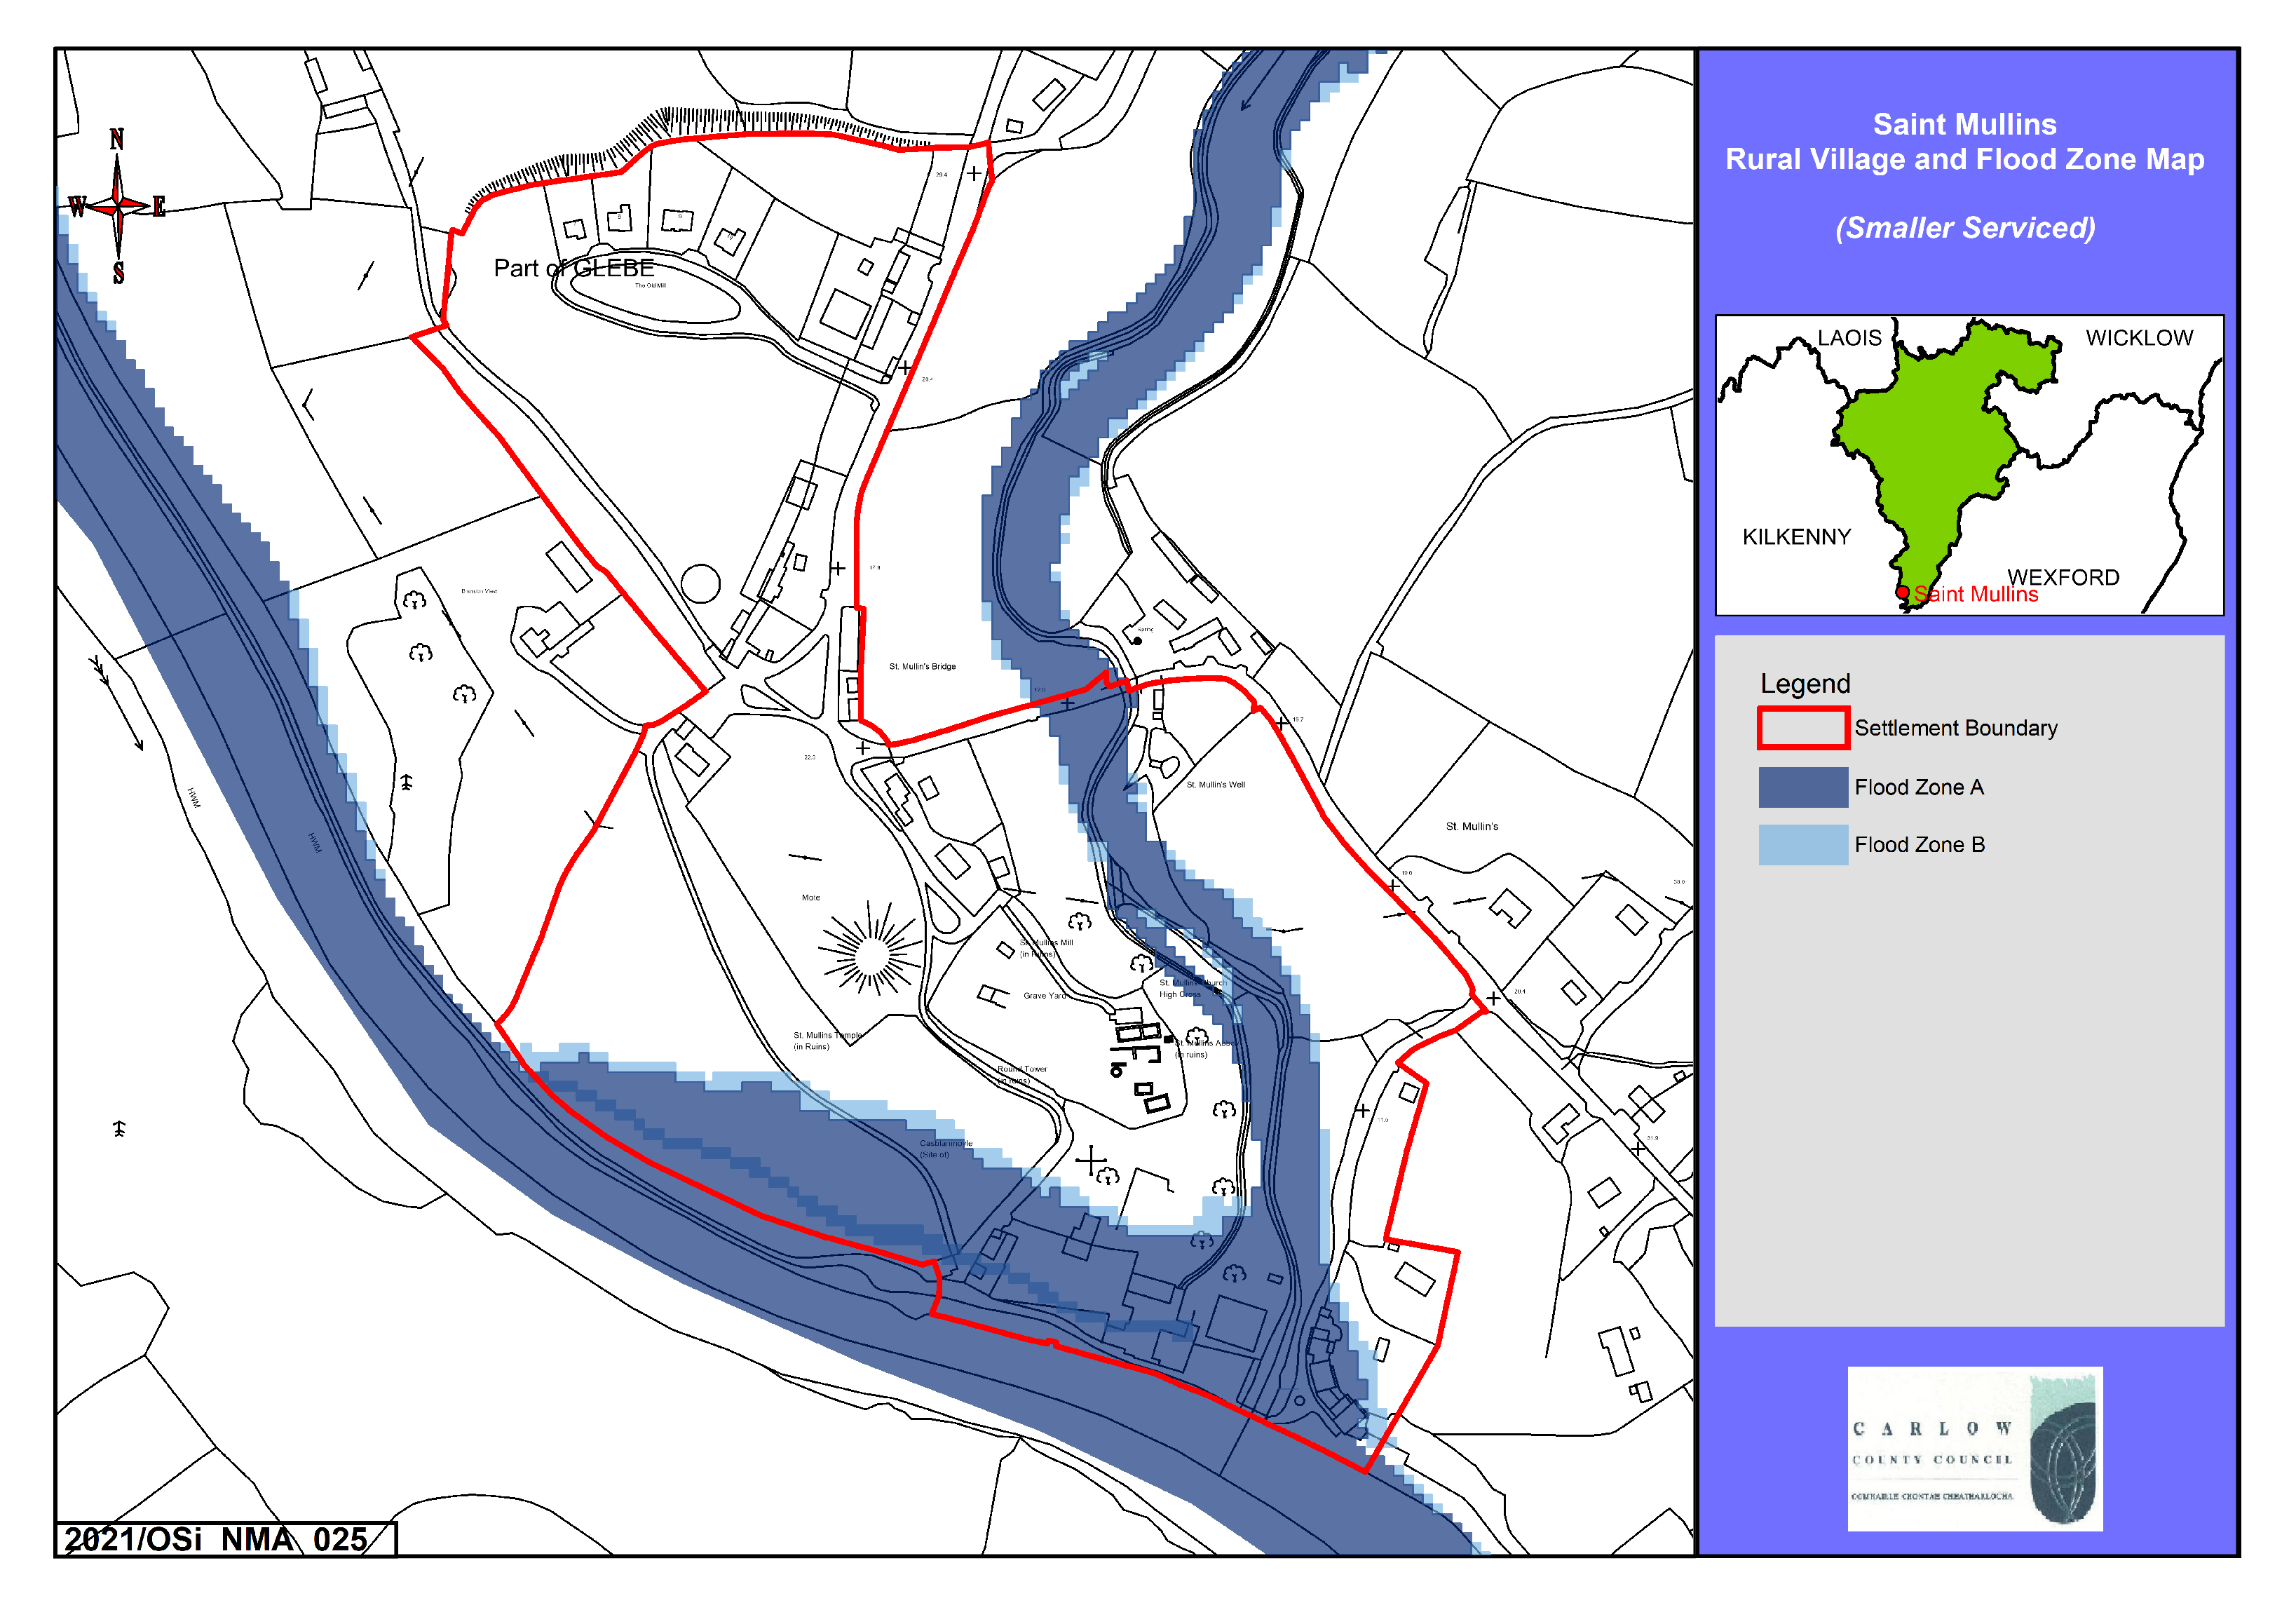 Saint Mullins Rural Village and Flood Zone Map